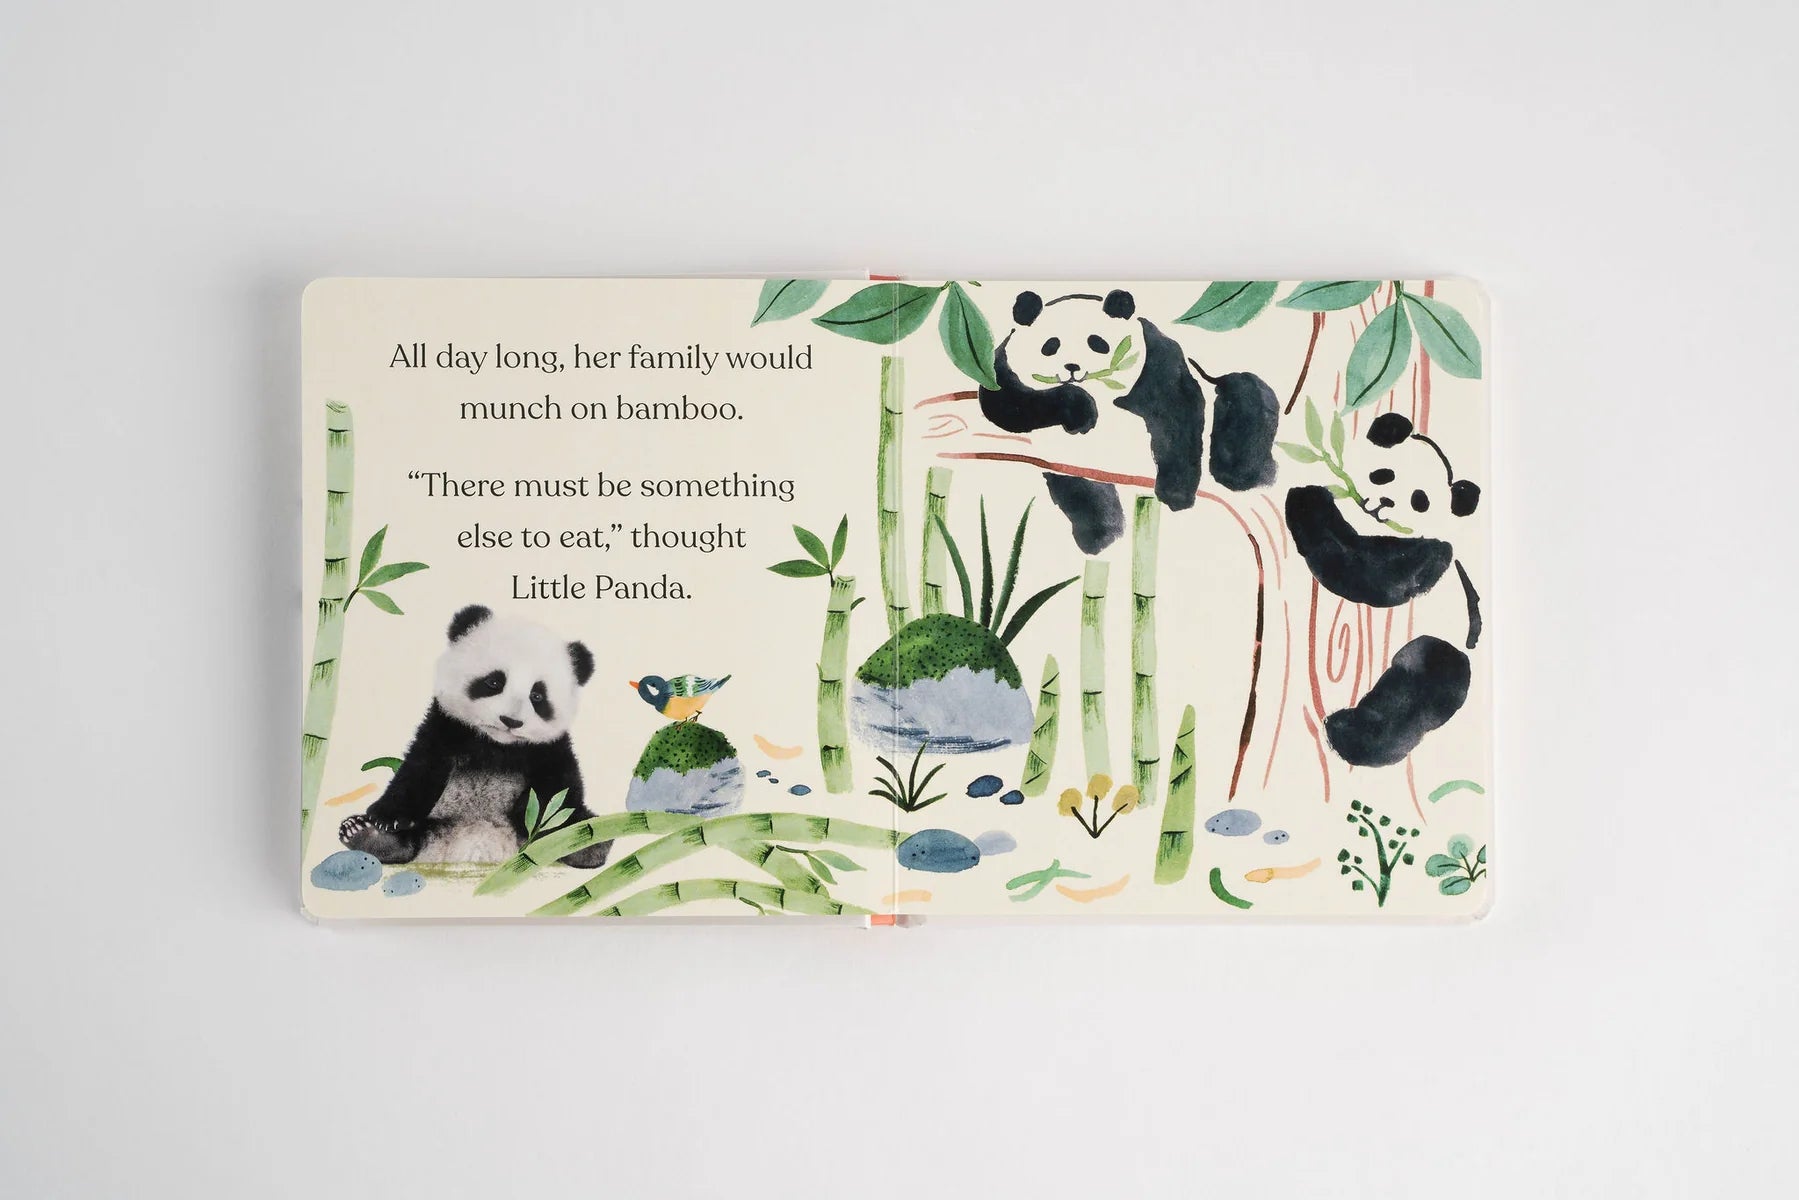 Goodnight, Little Panda - Board Book